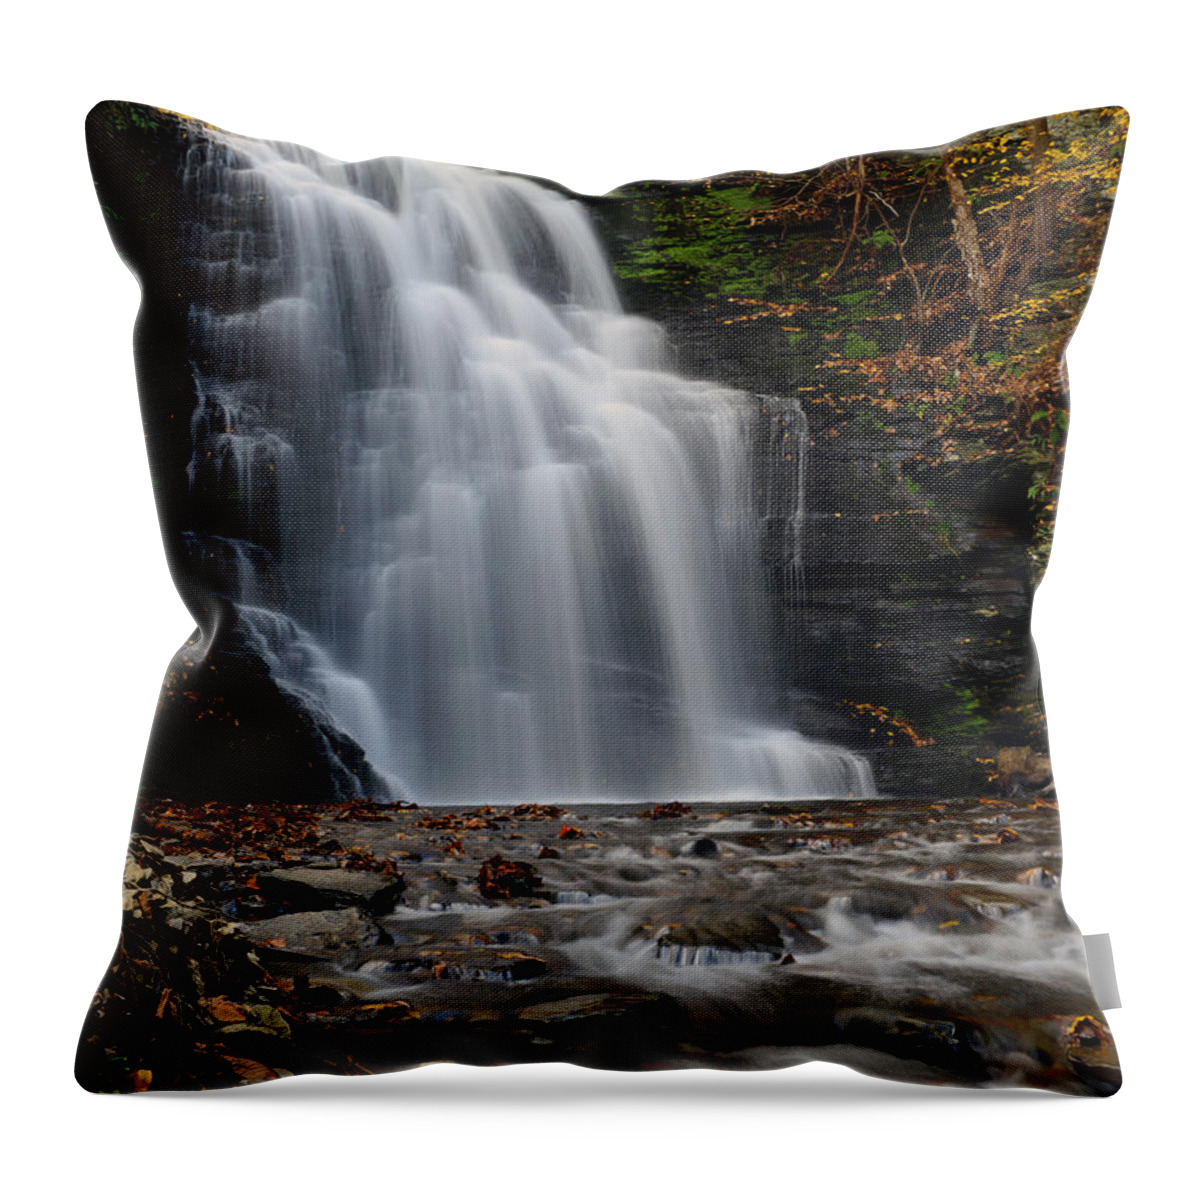 Bushkill Falls Throw Pillow featuring the photograph Bushkill Falls by Yue Wang